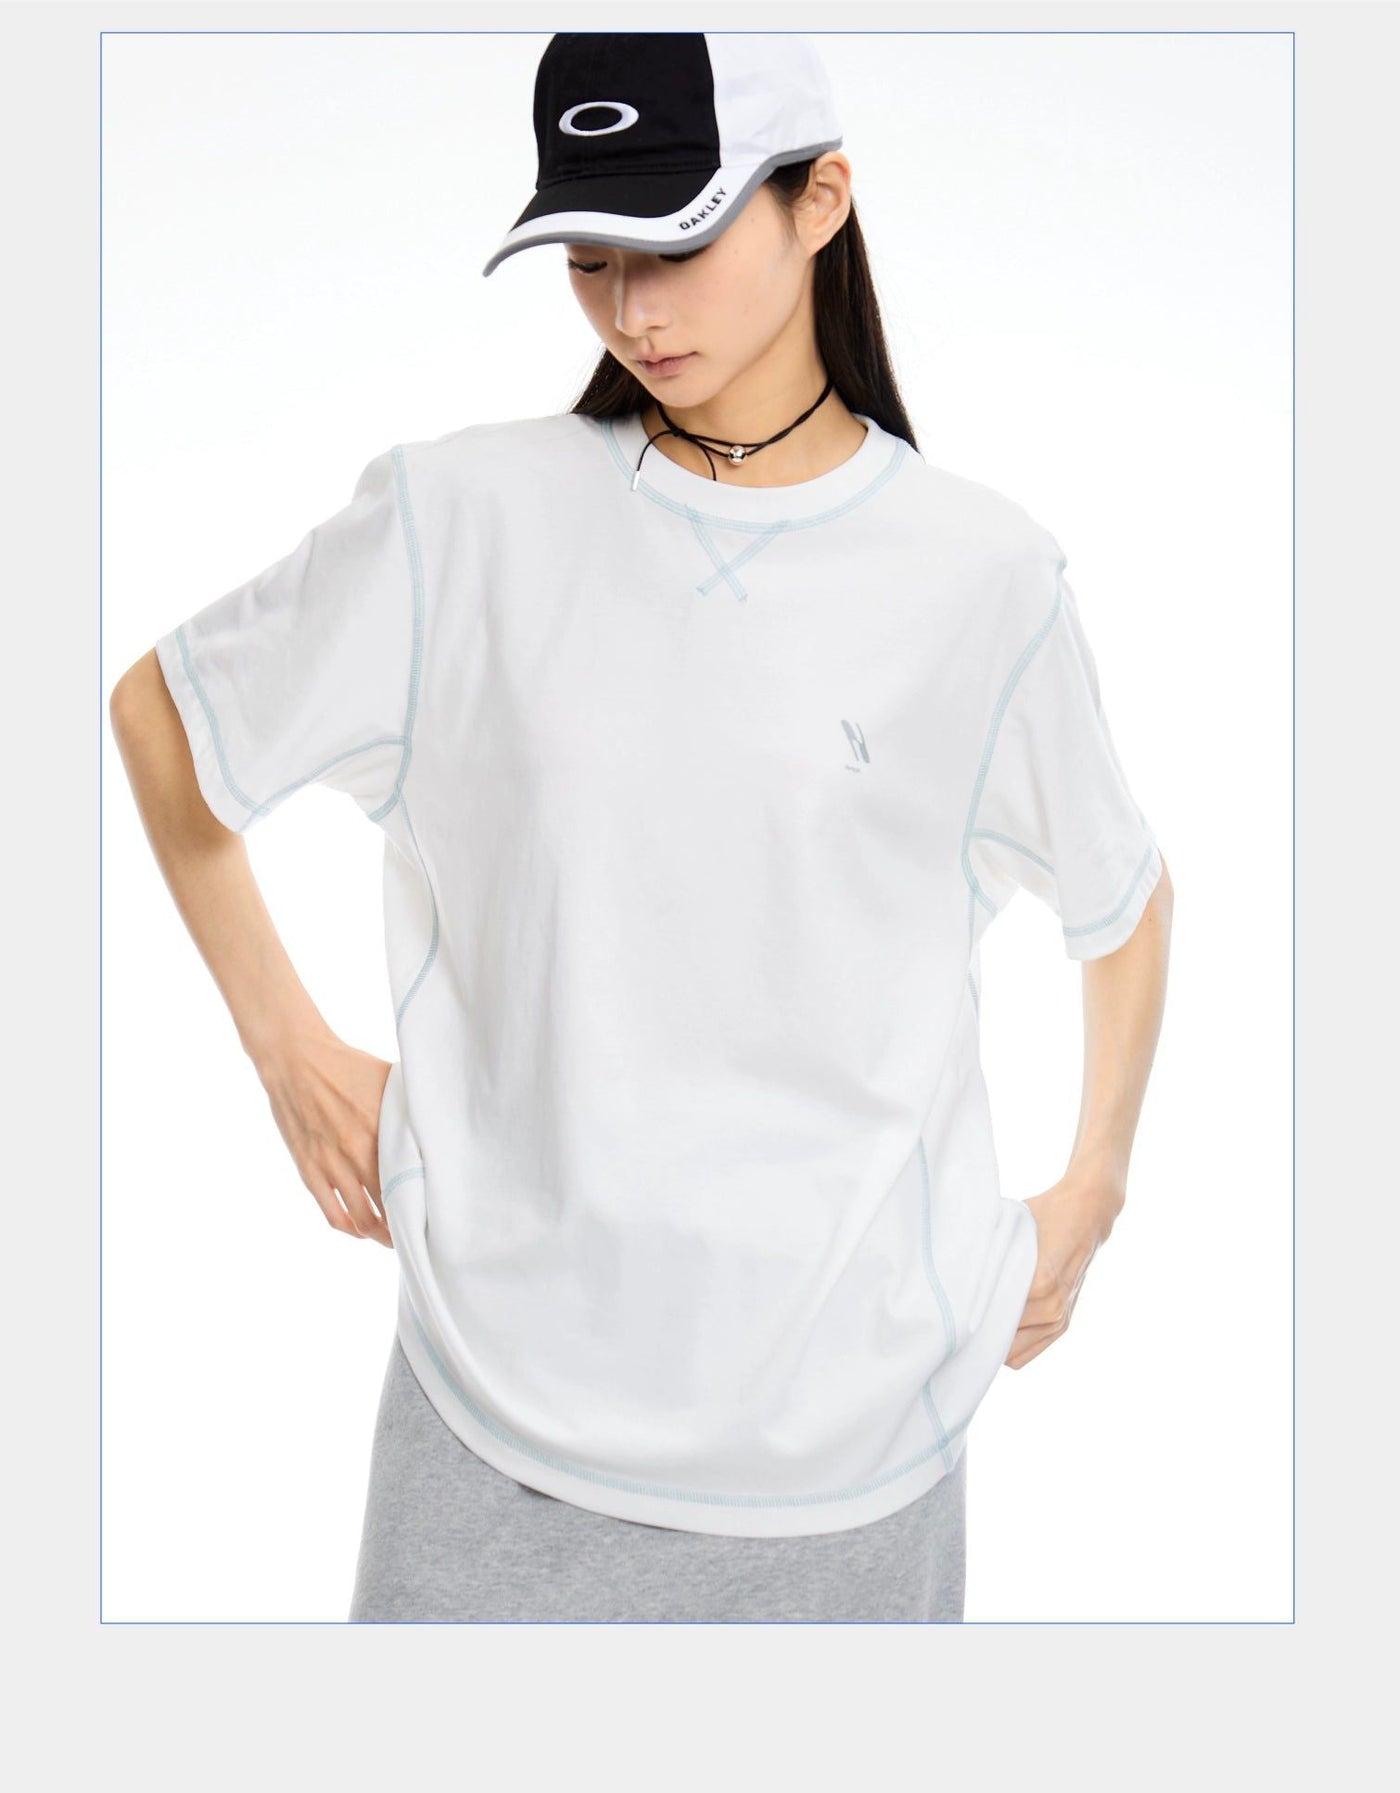 Contrast Seams Sports T-Shirt Korean Street Fashion T-Shirt By Roaring Wild Shop Online at OH Vault